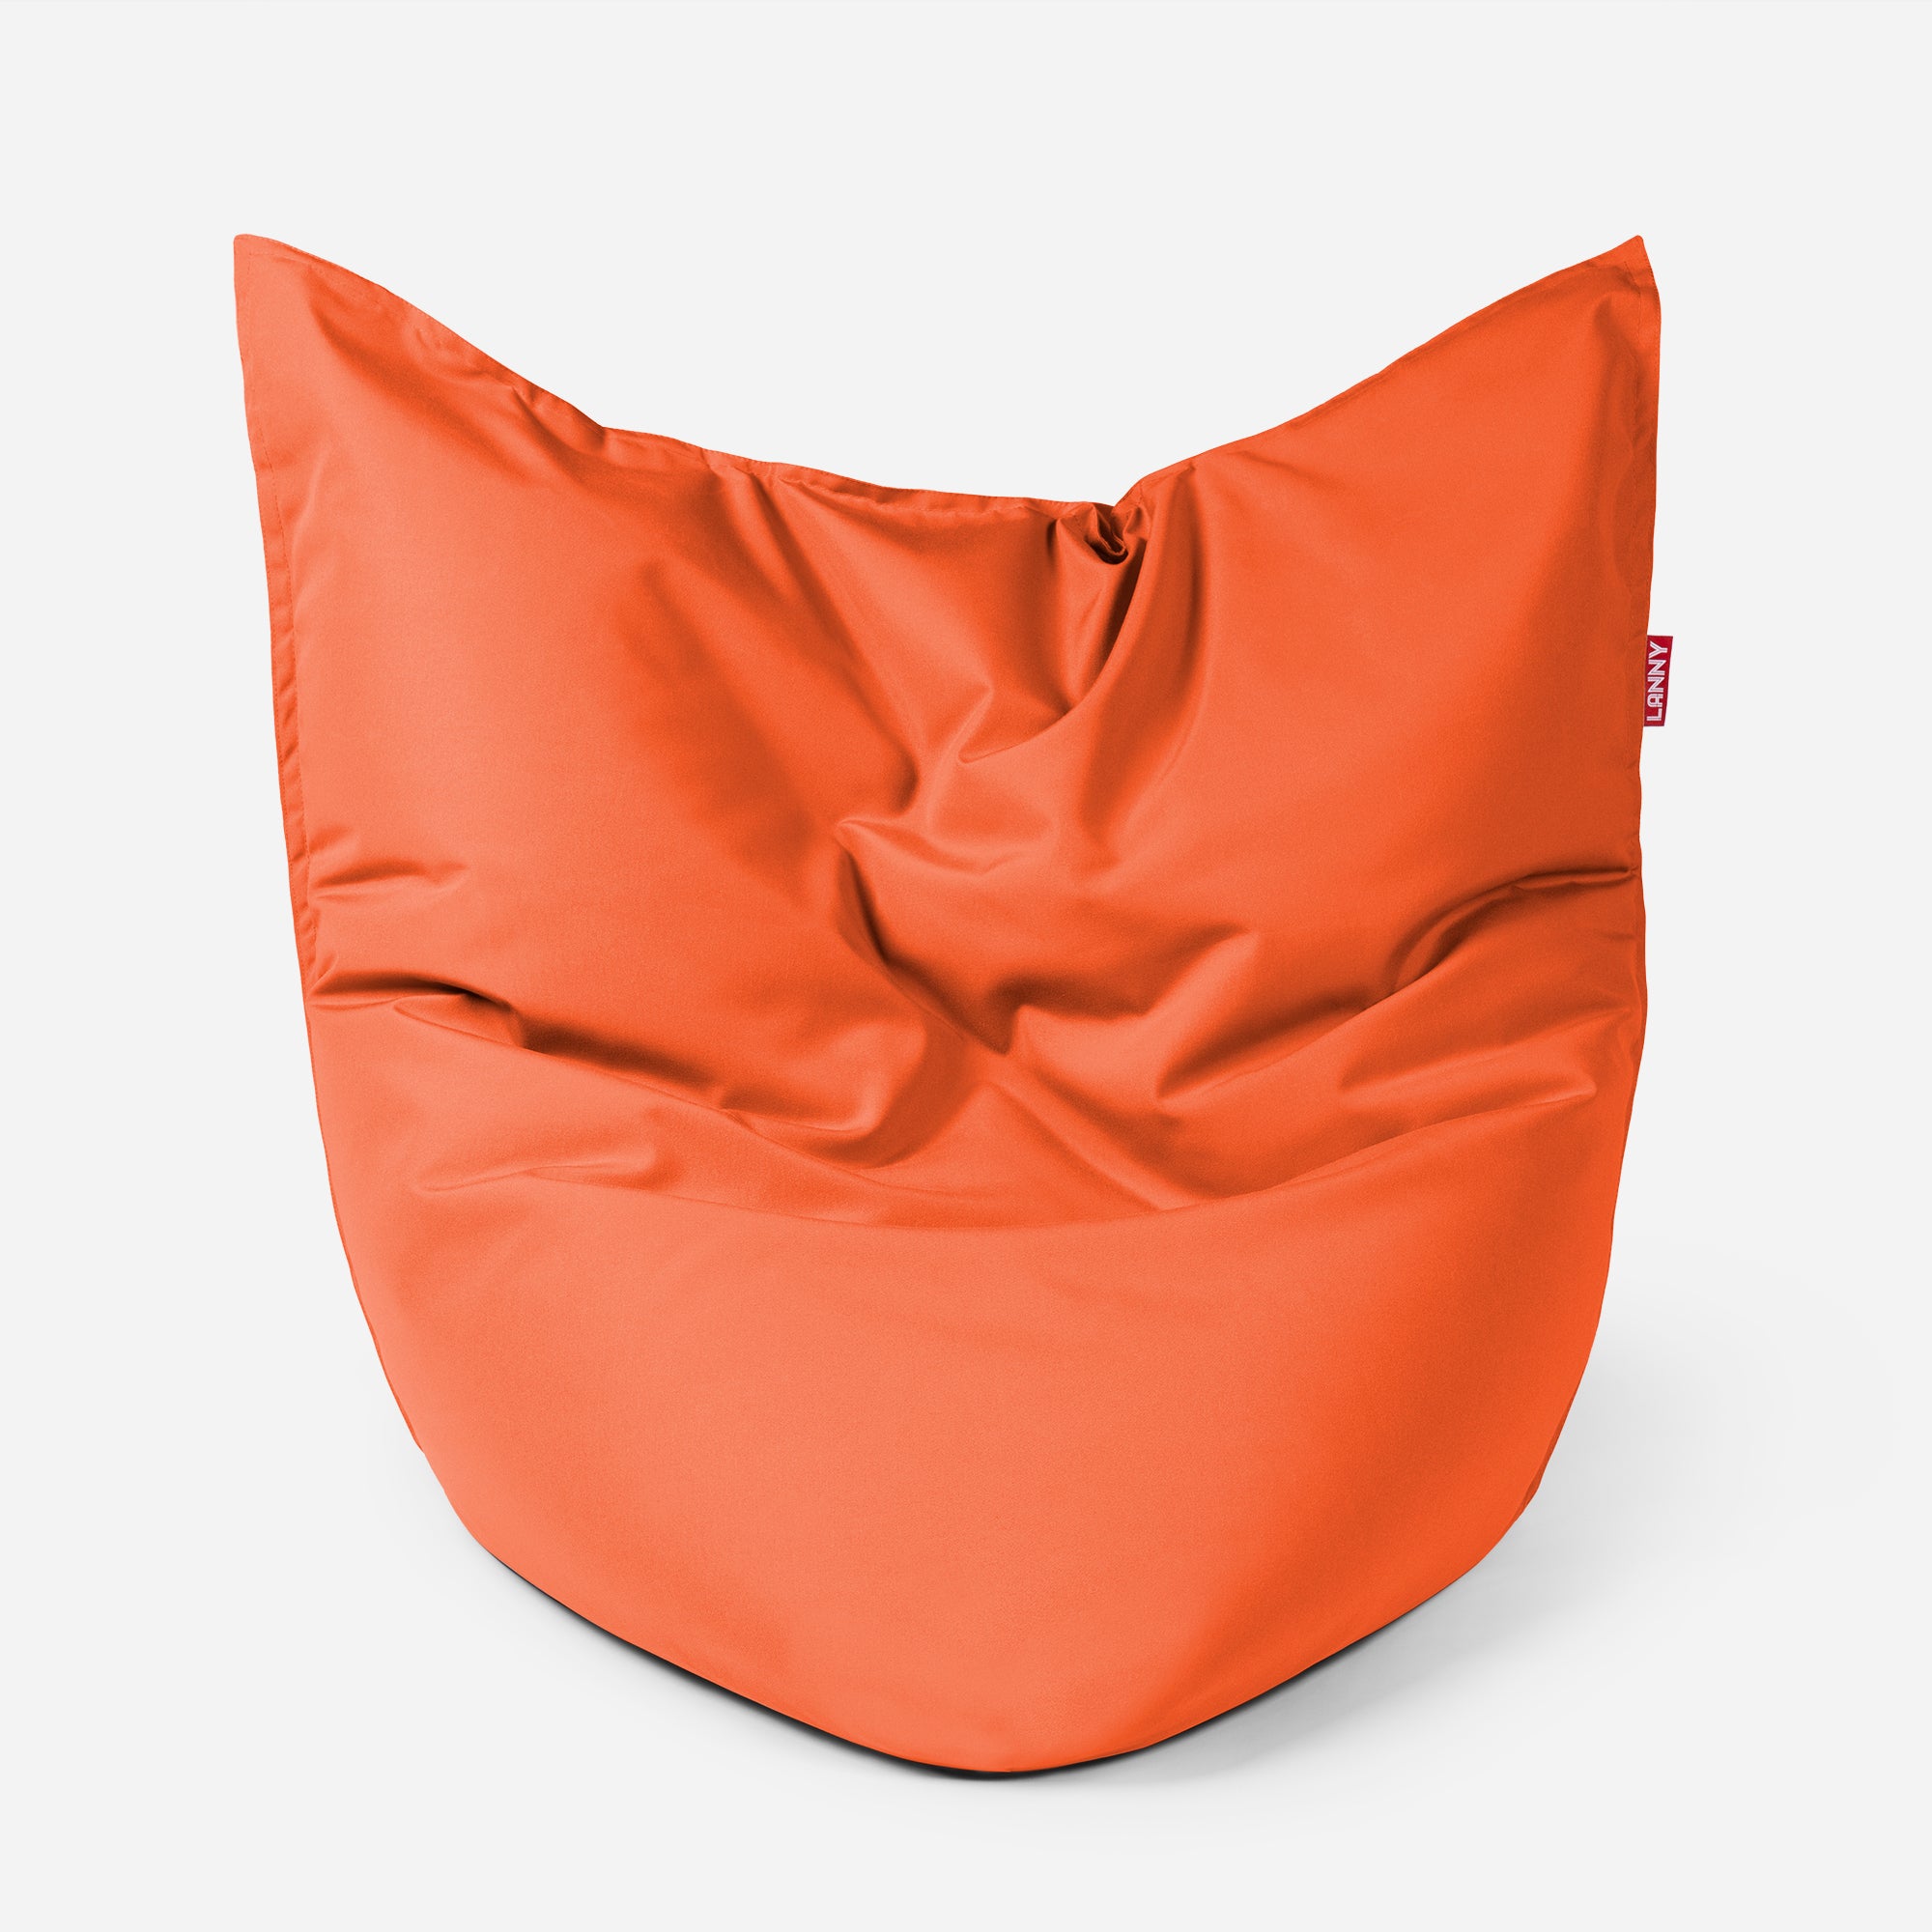 Sloppy Outdoor Orange Bean Bag